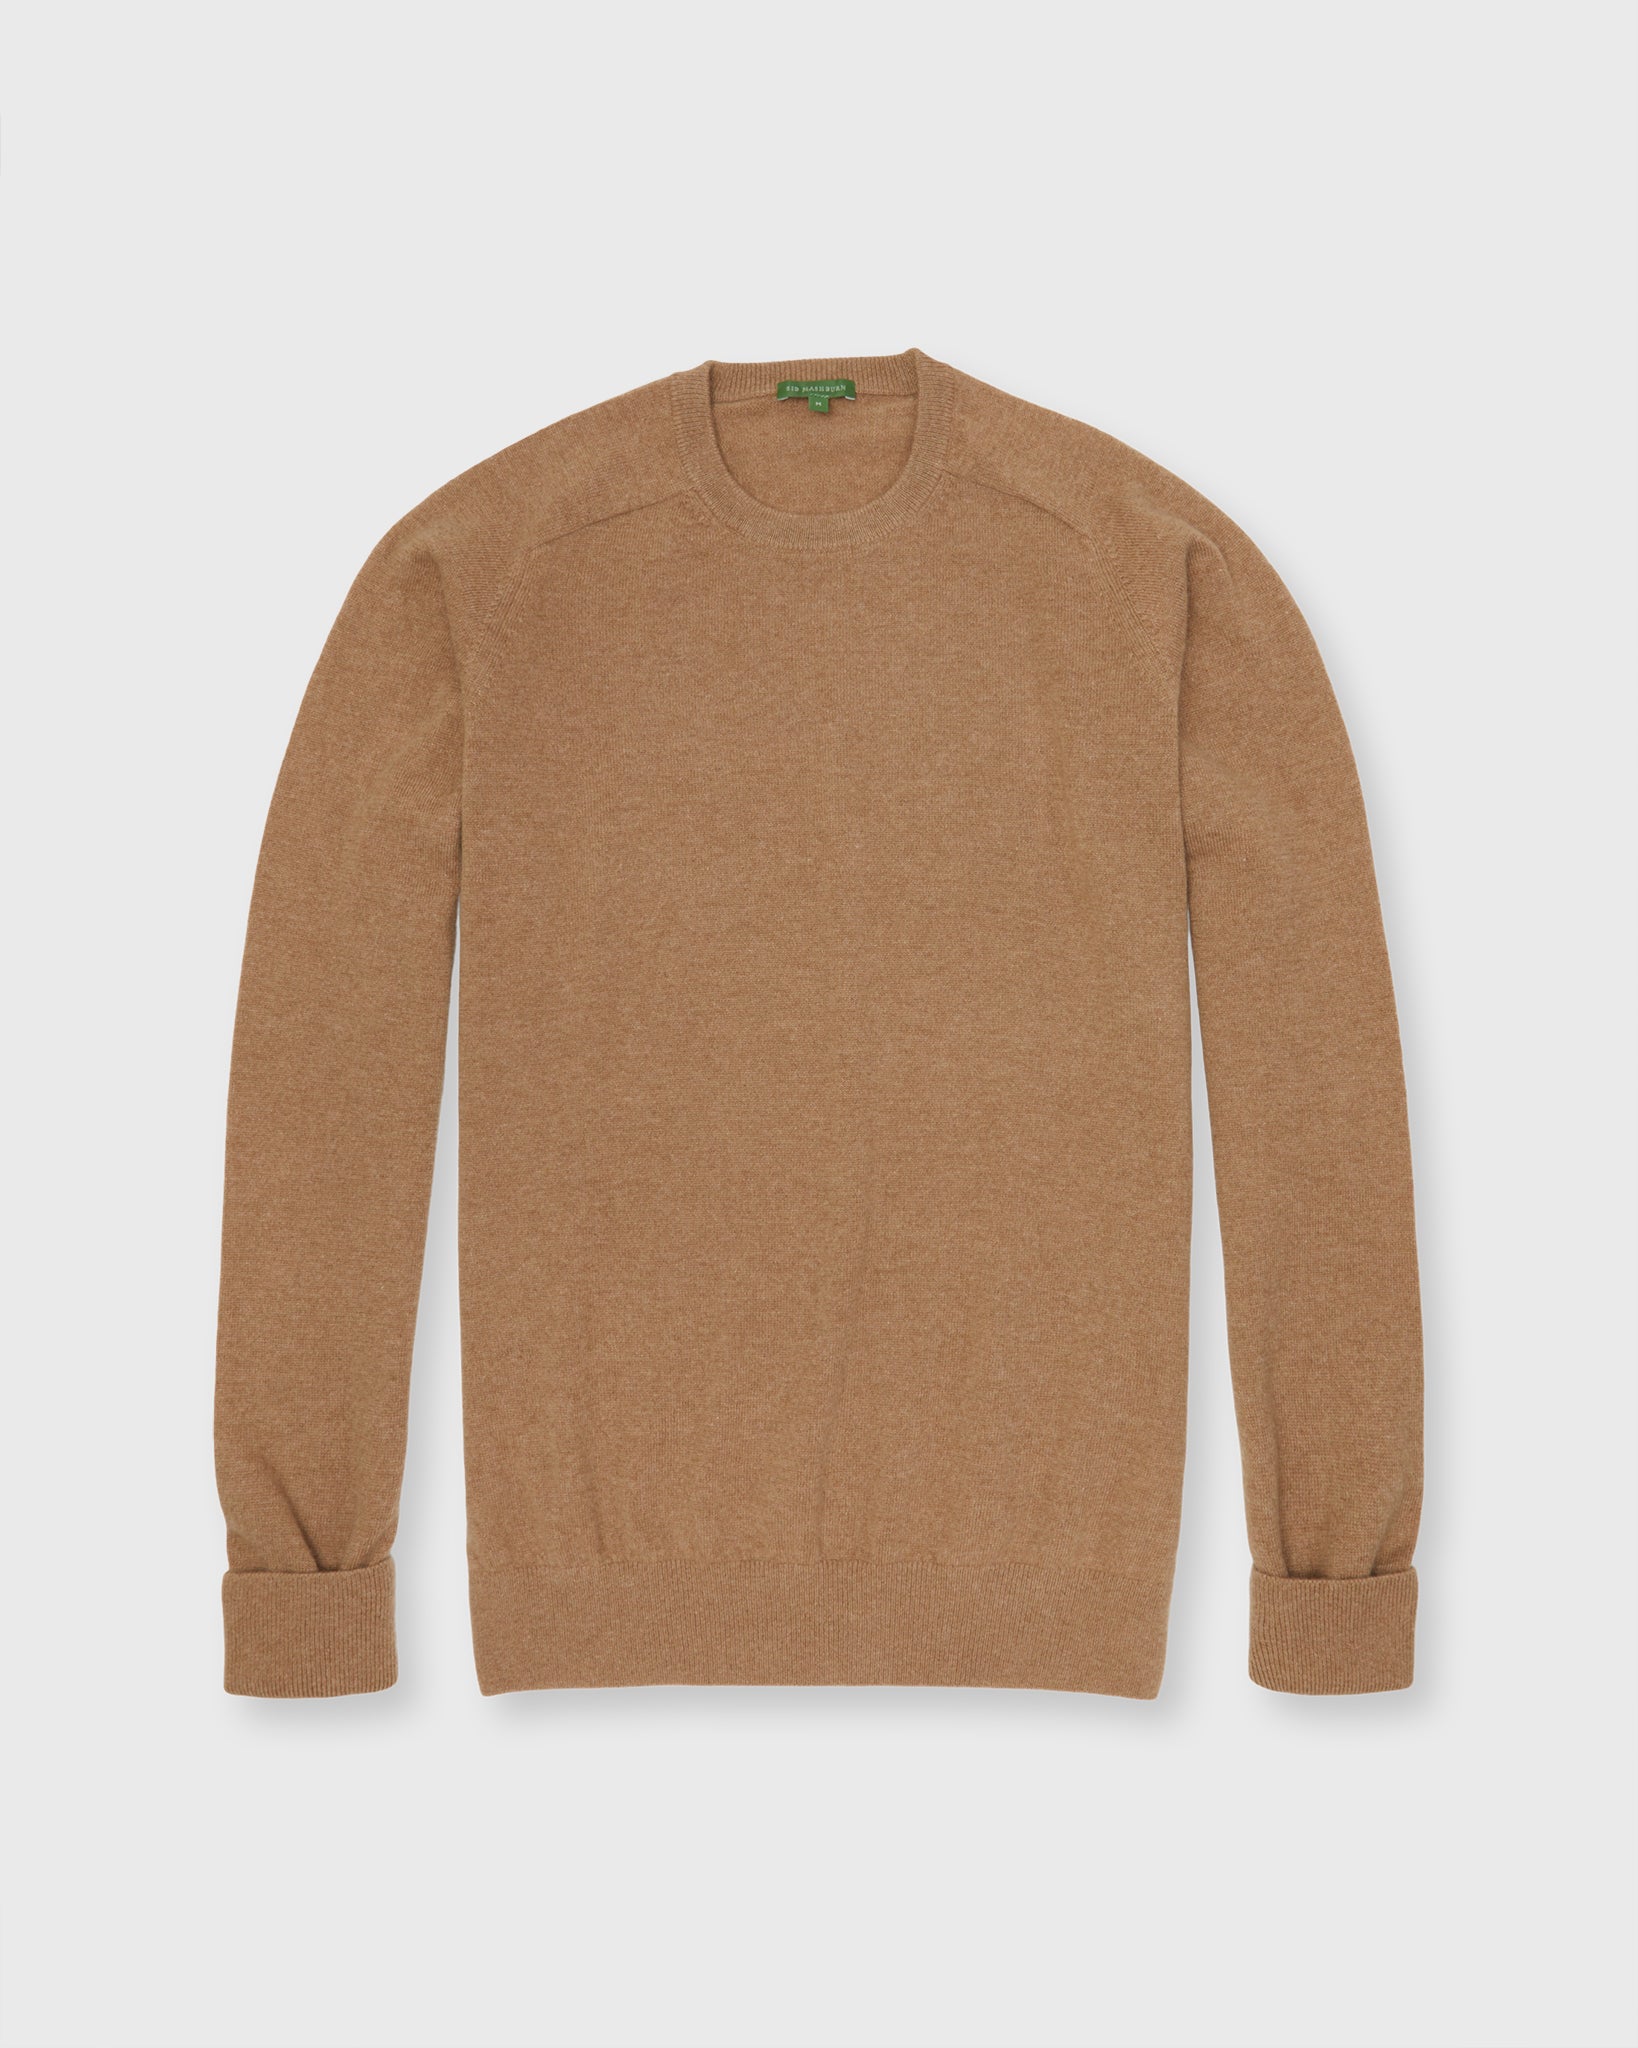 Classic Crewneck Sweater in Camel Cashmere